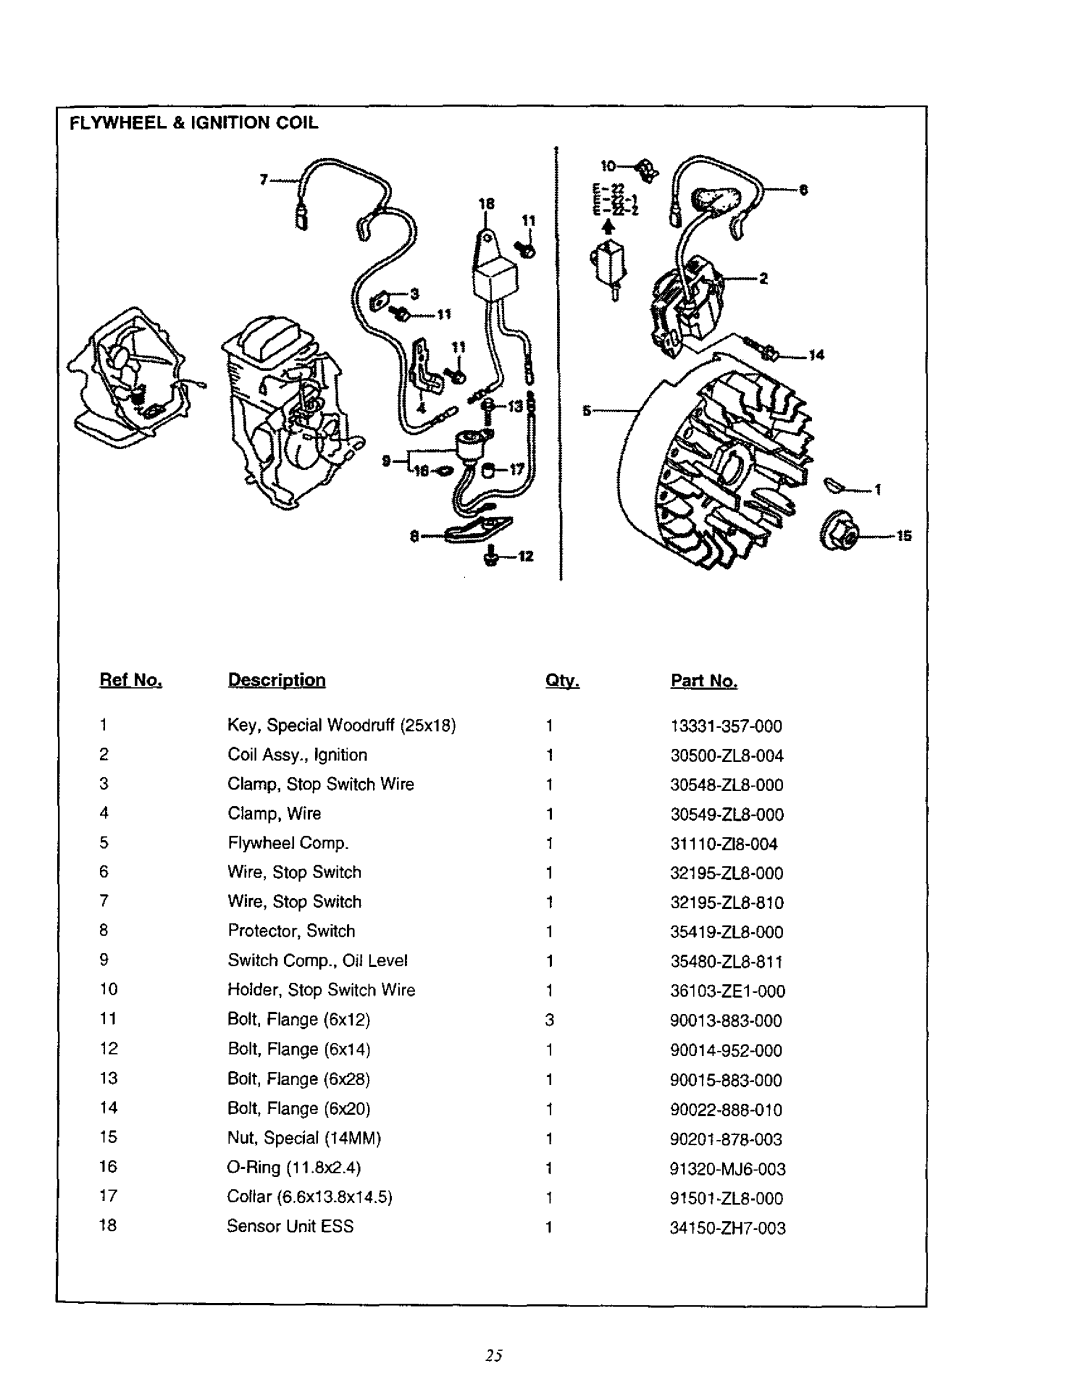 Craftsman 580.76201 owner manual Lywheel & Ignition Coil, Ref N, Descr, O-Ring 